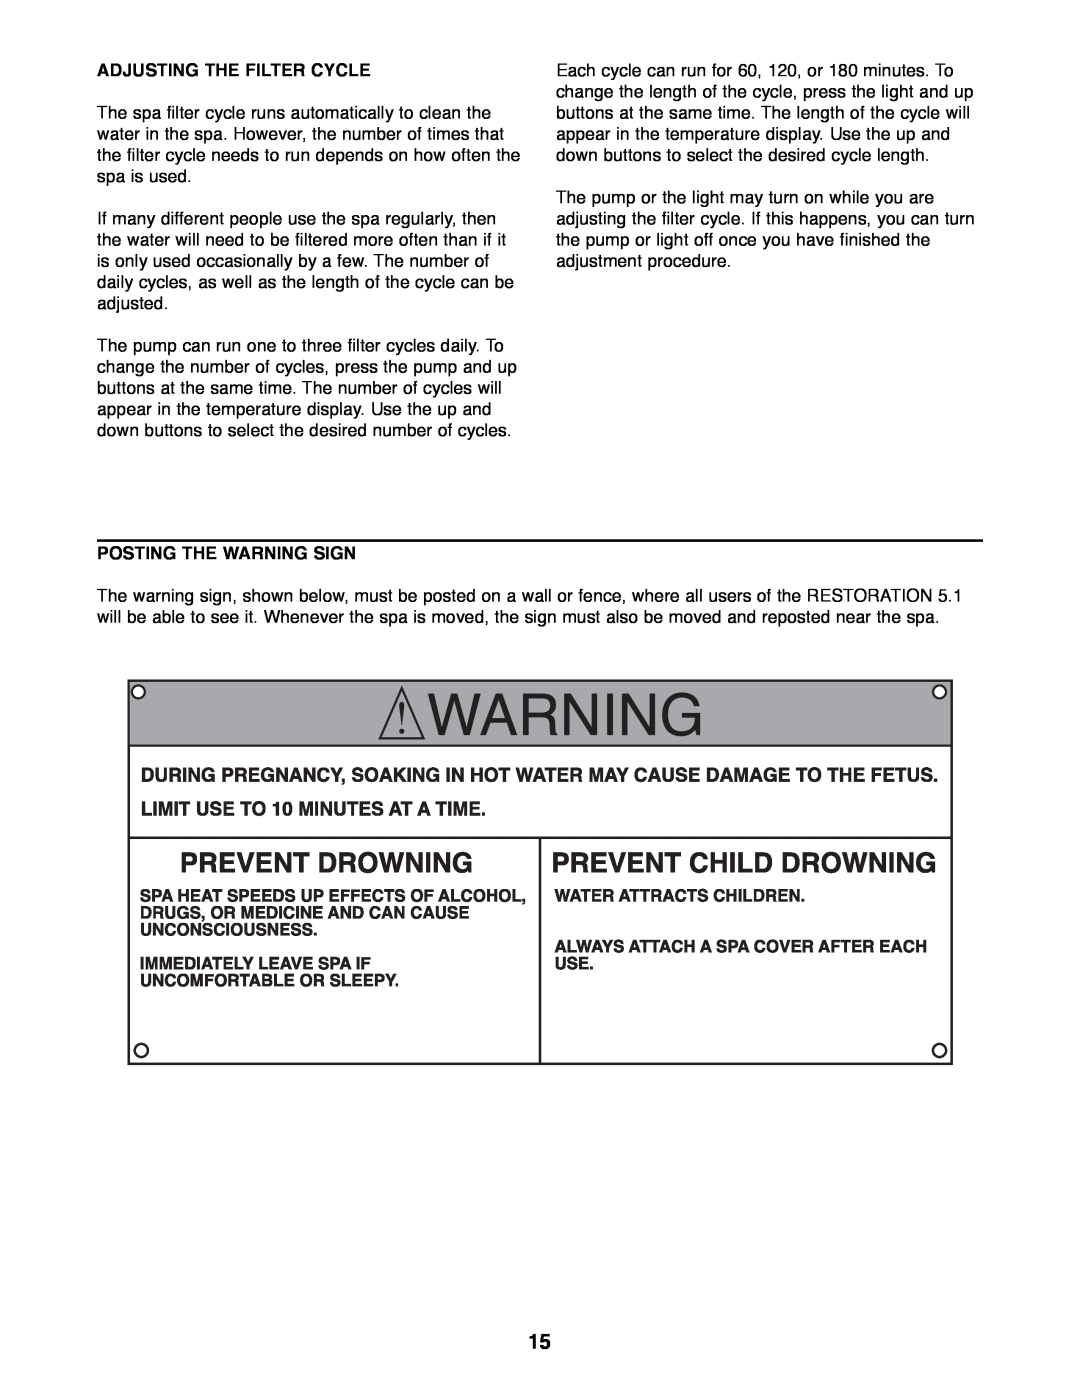 ProForm 831.21005 user manual Adjusting The Filter Cycle, Posting The Warning Sign 